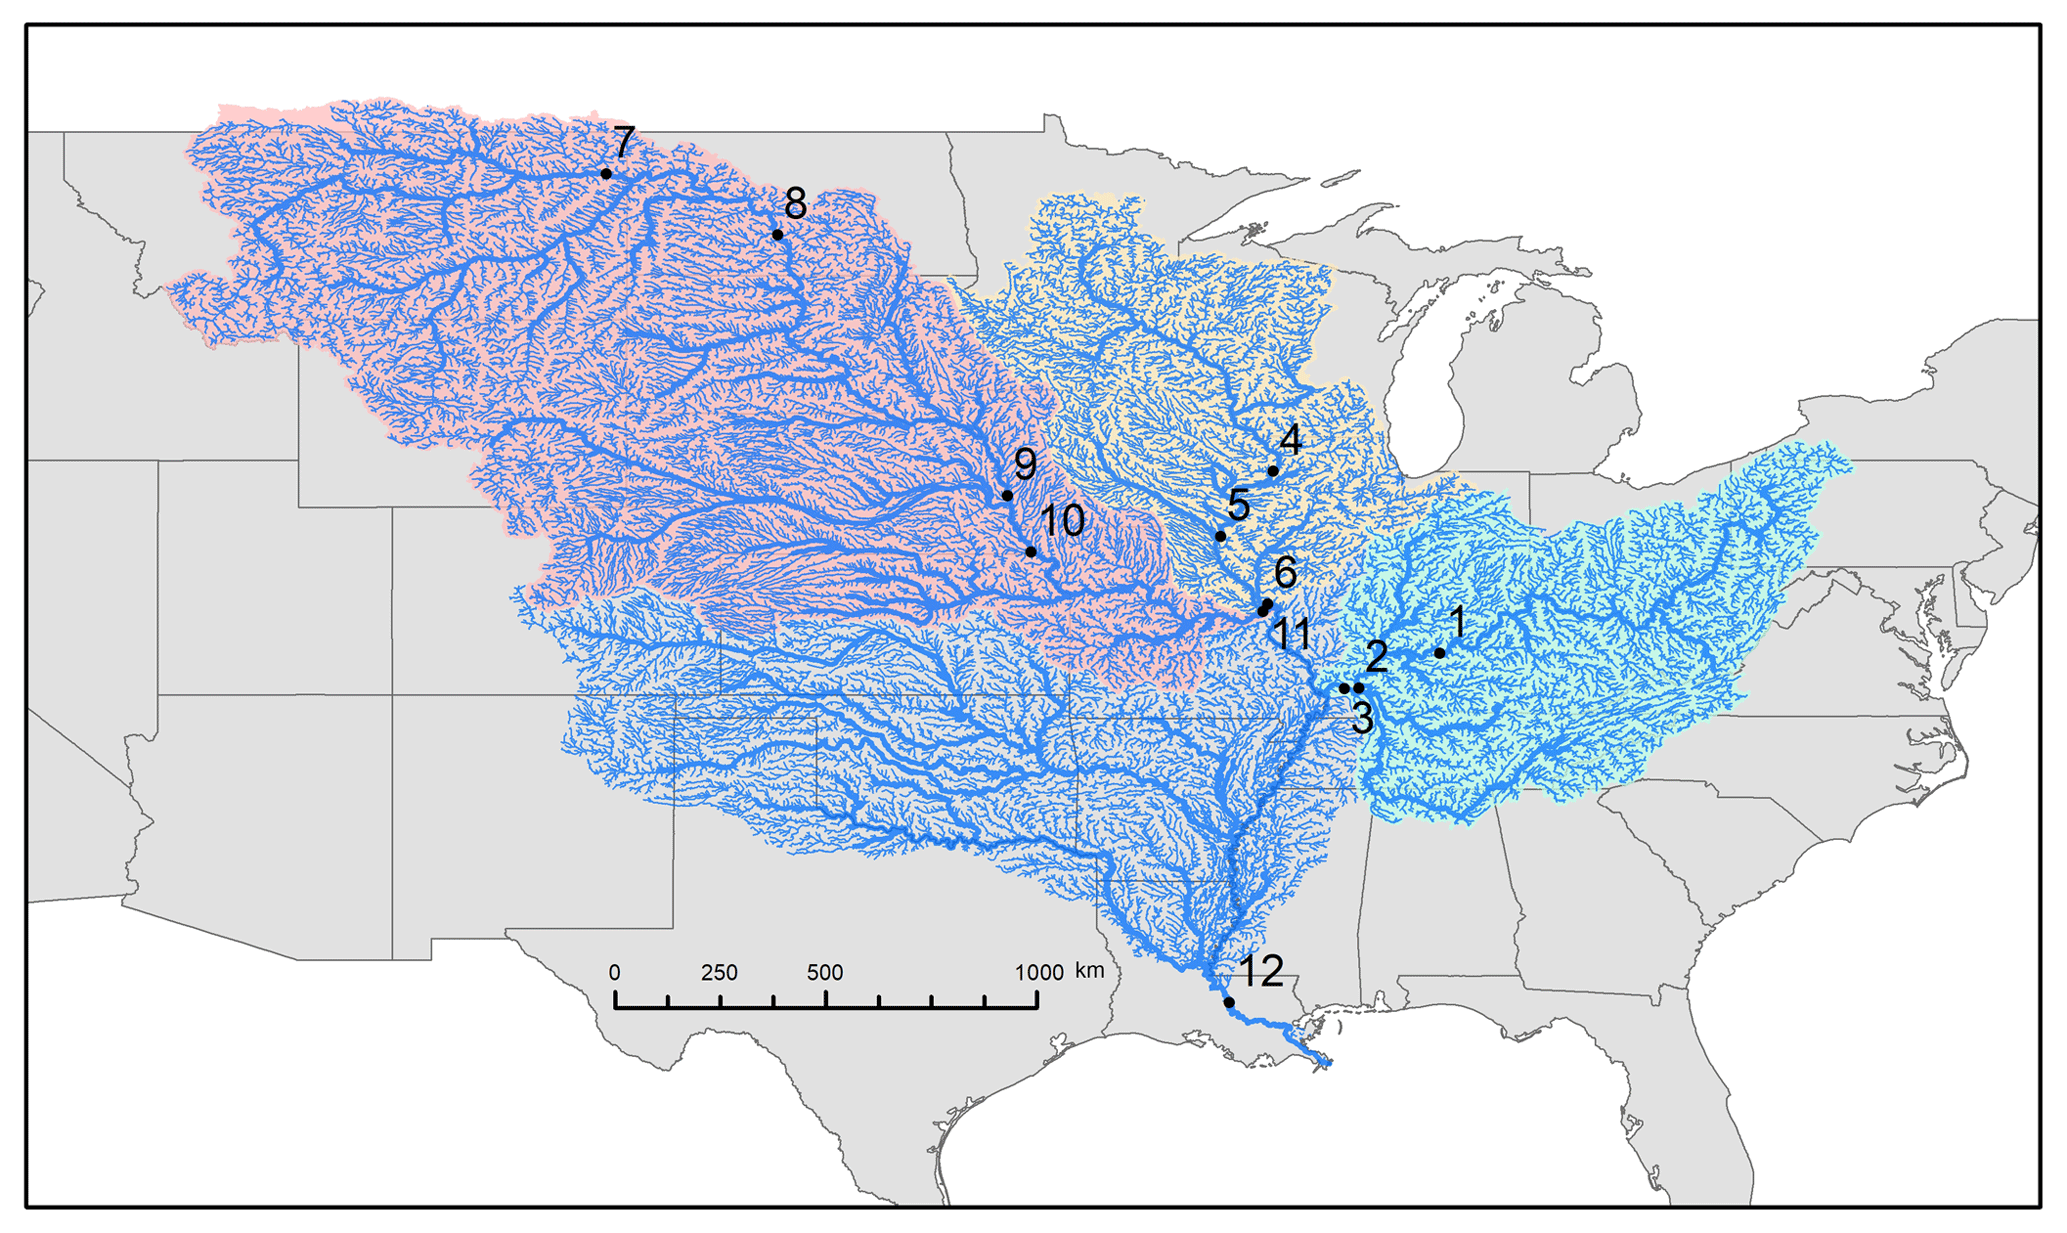 Реки бассейна атлантического океана северной америки. Река Миссисипи на карте. Река Миссисипи на карте Северной Америки. Карита бассейна реки Миссисипи. Река Миссисипи на контурной карте.